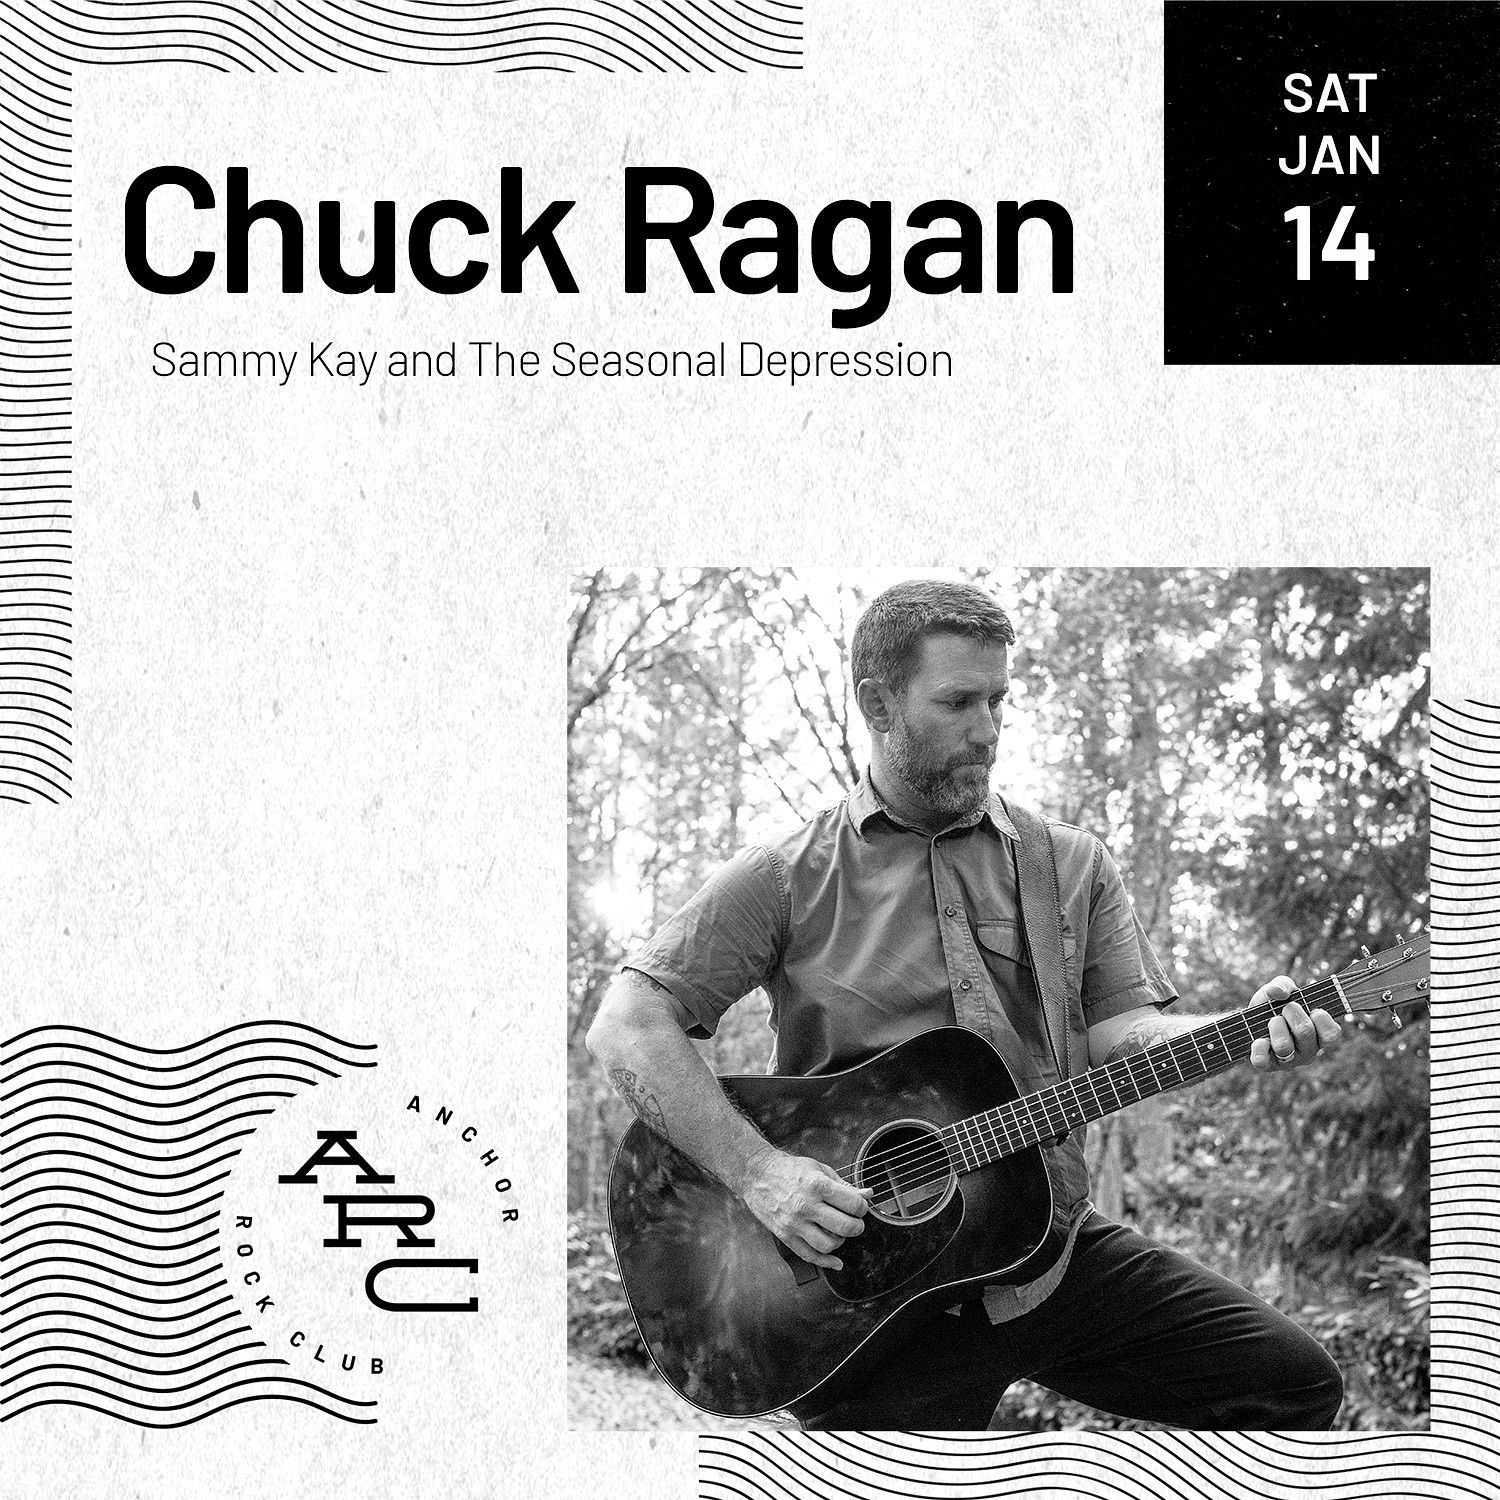 Chuck Ragan Tickets at Anchor Rock Club in Atlantic City by Anchor Rock